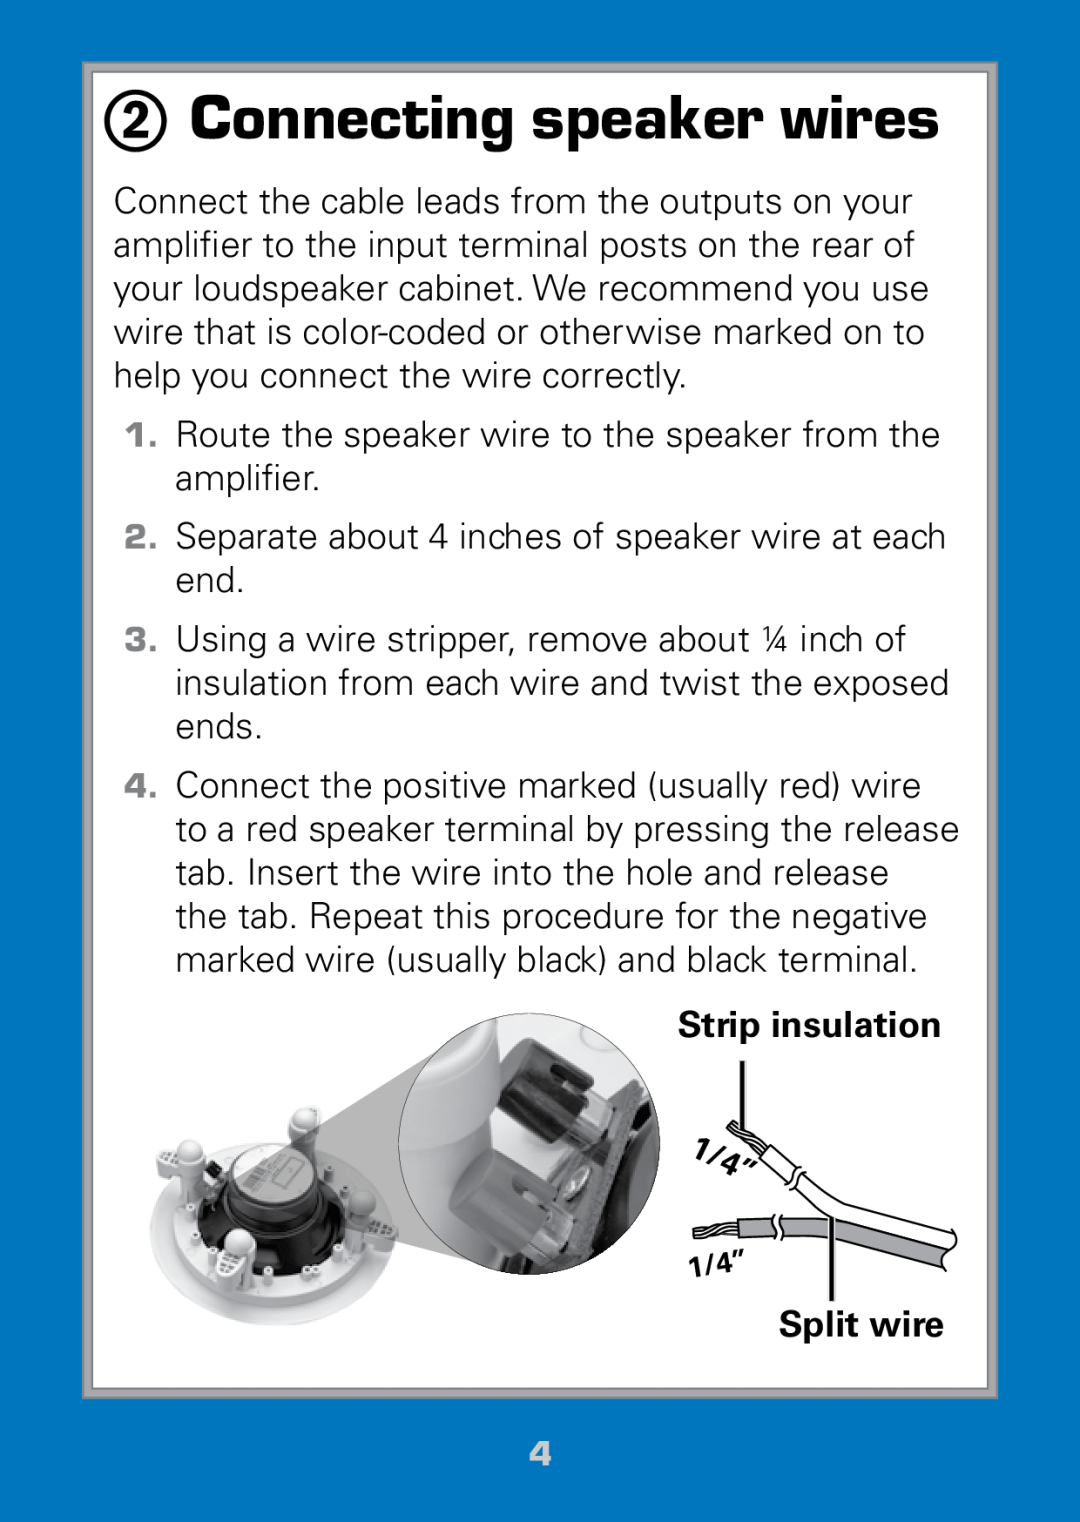 Radio Shack 40-289 manual 2Connecting speaker wires, 1/4’’, Strip insulation, Split wire 